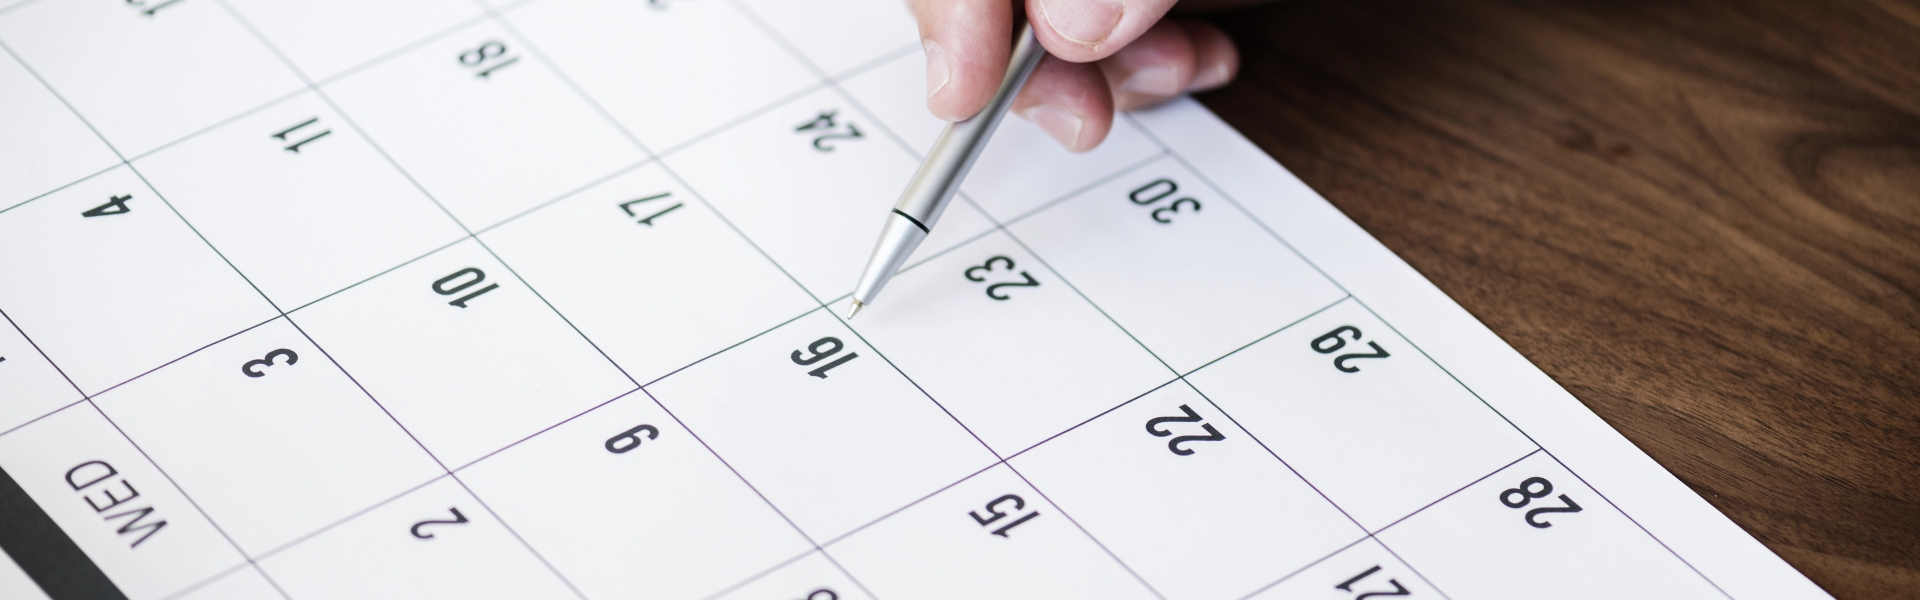 businessman marking calendar appointment